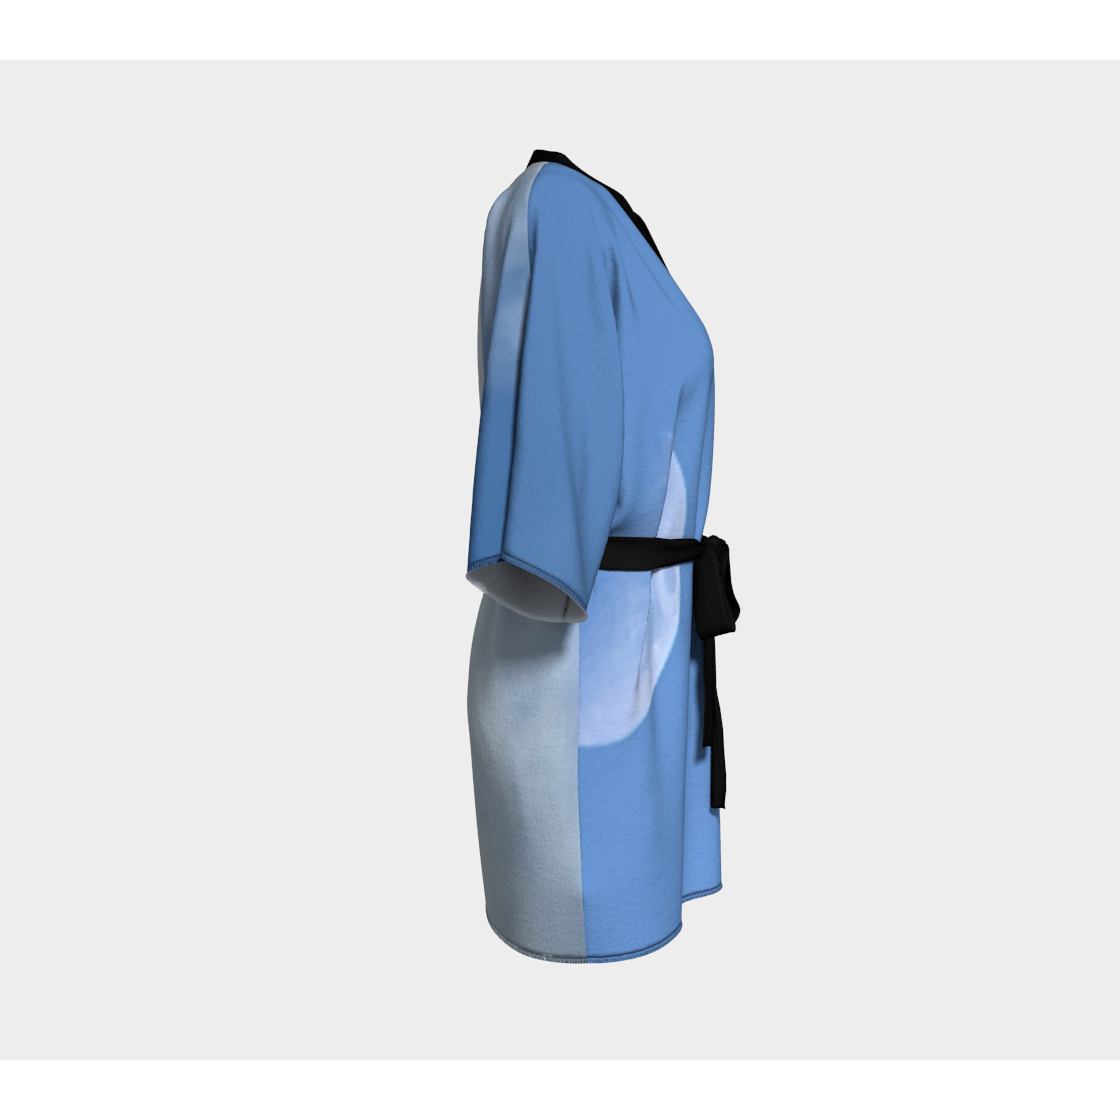 Kimono Robe for women with: Half Moon Design, Right Side